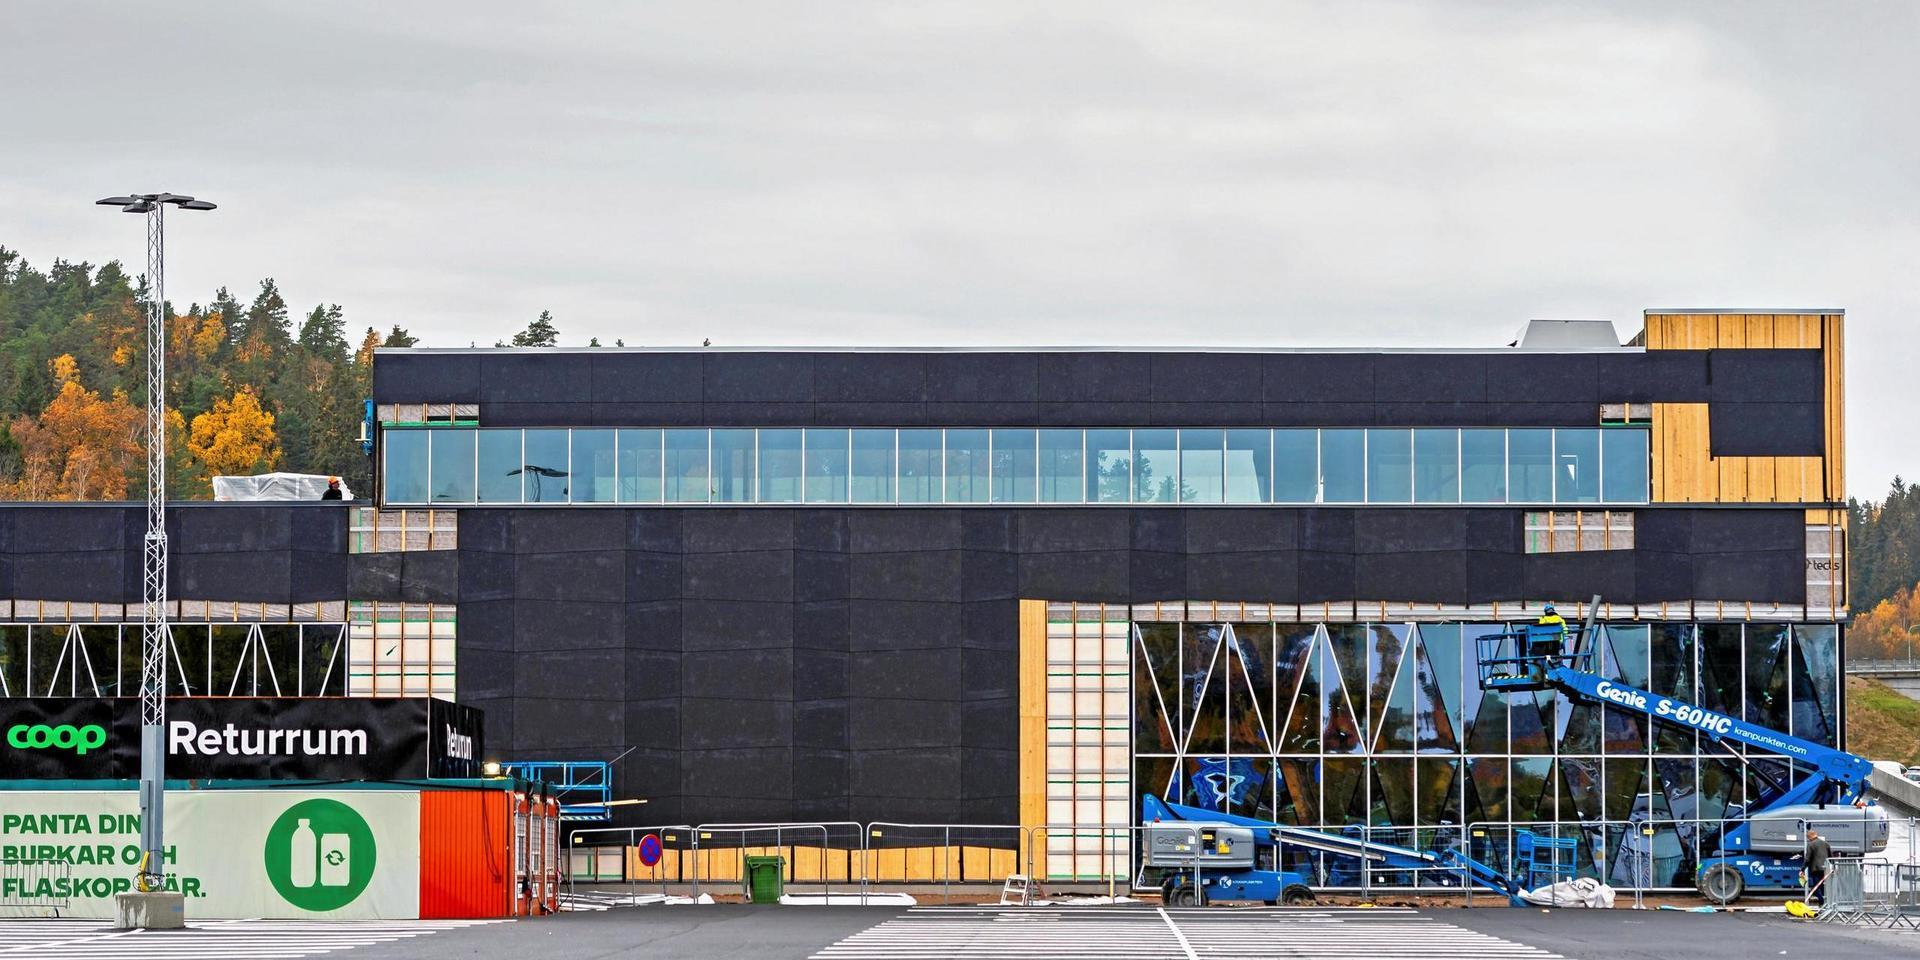 Nya Coop under byggnation i Uddevalla år 2019.